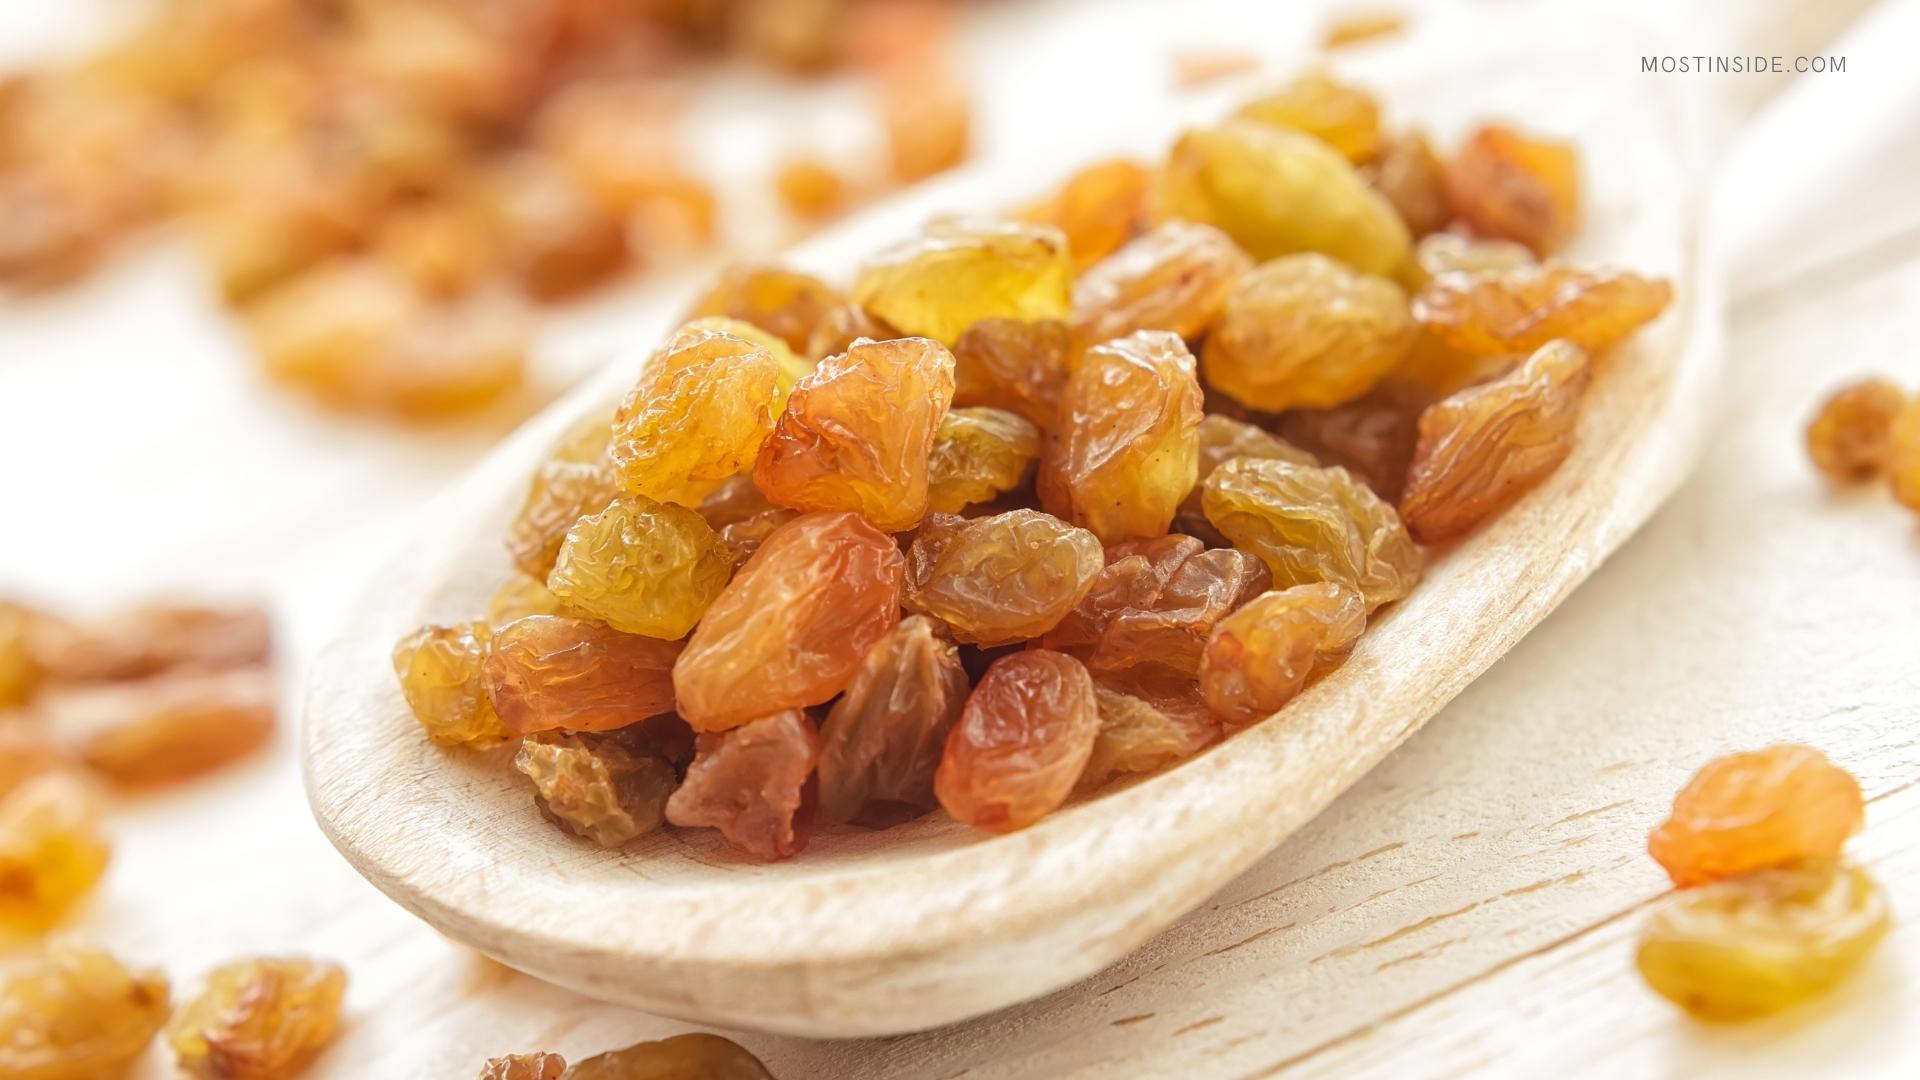 Benefits of Soaked Raisins